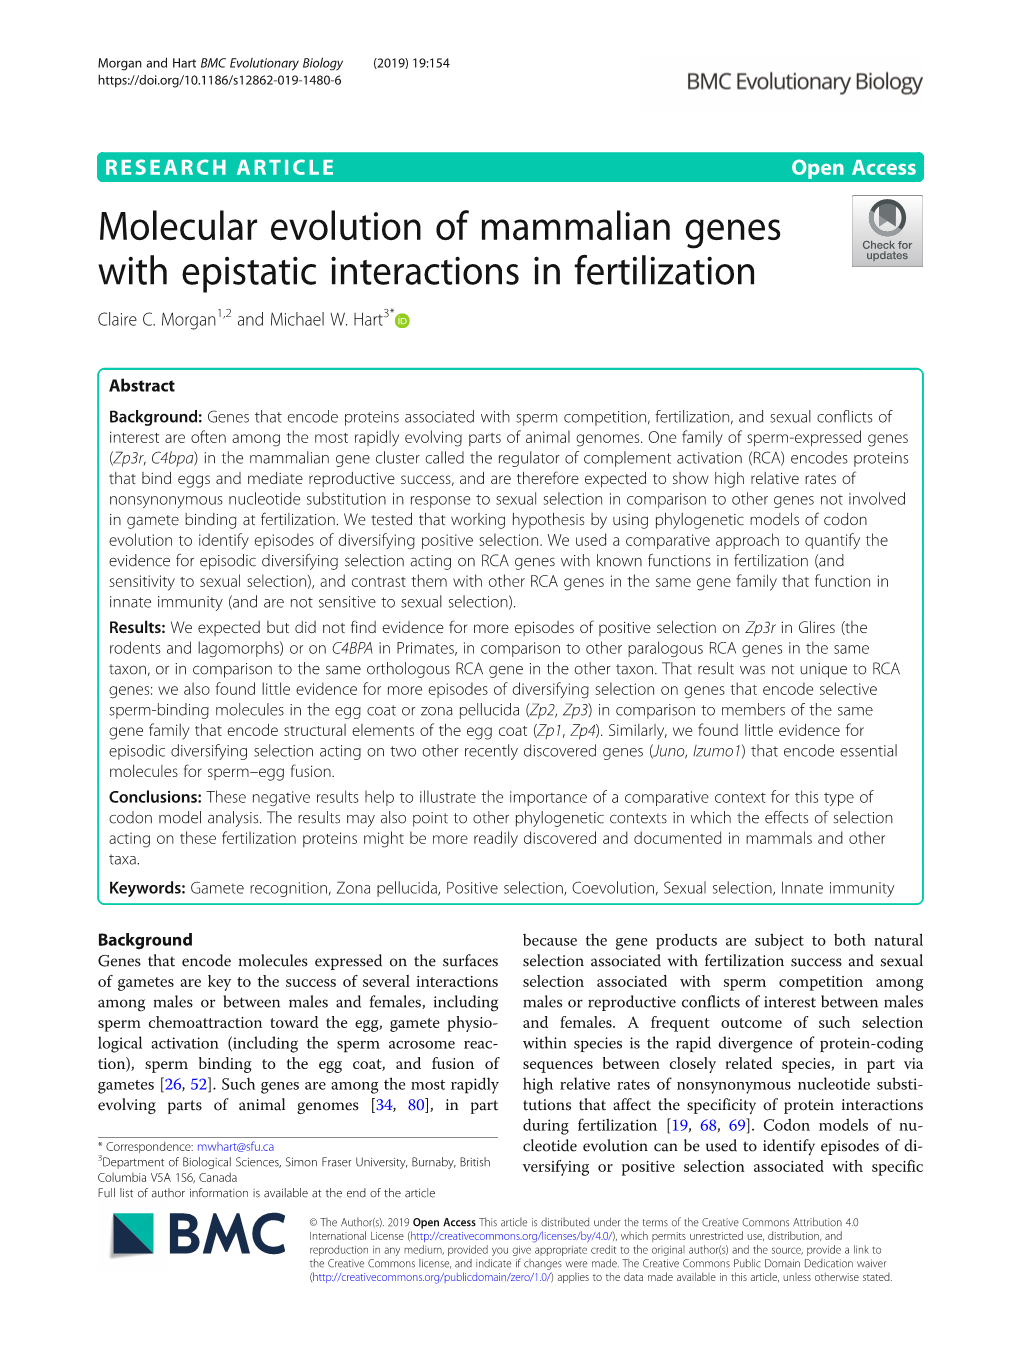 Molecular Evolution of Mammalian Genes with Epistatic Interactions in Fertilization Claire C